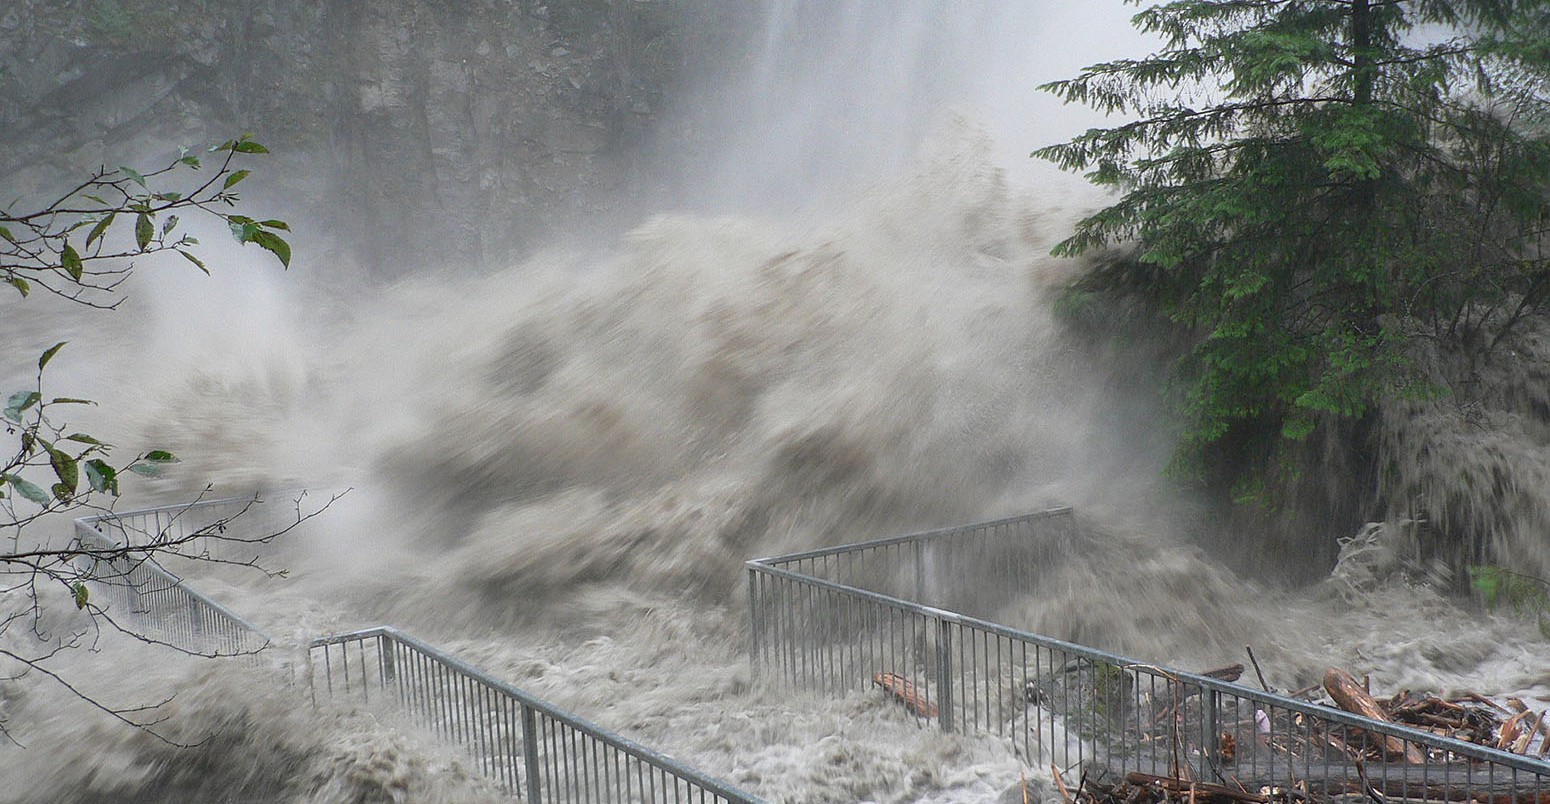 November 2006 flood, Granite Falls on the Stillaguamish River, Washington